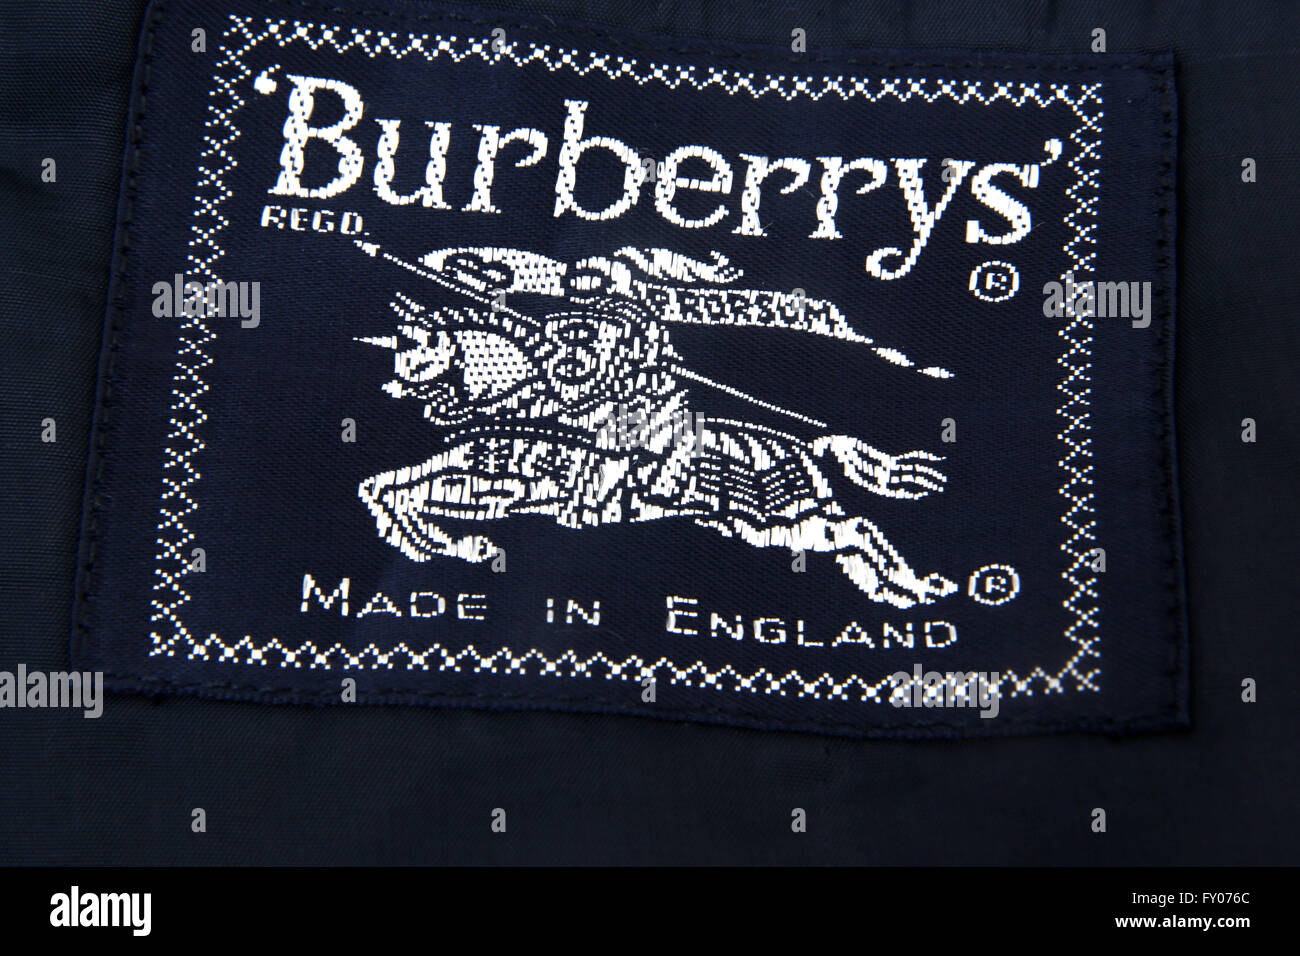 Burberry's Label On Black Jacket Stock Photo - Alamy